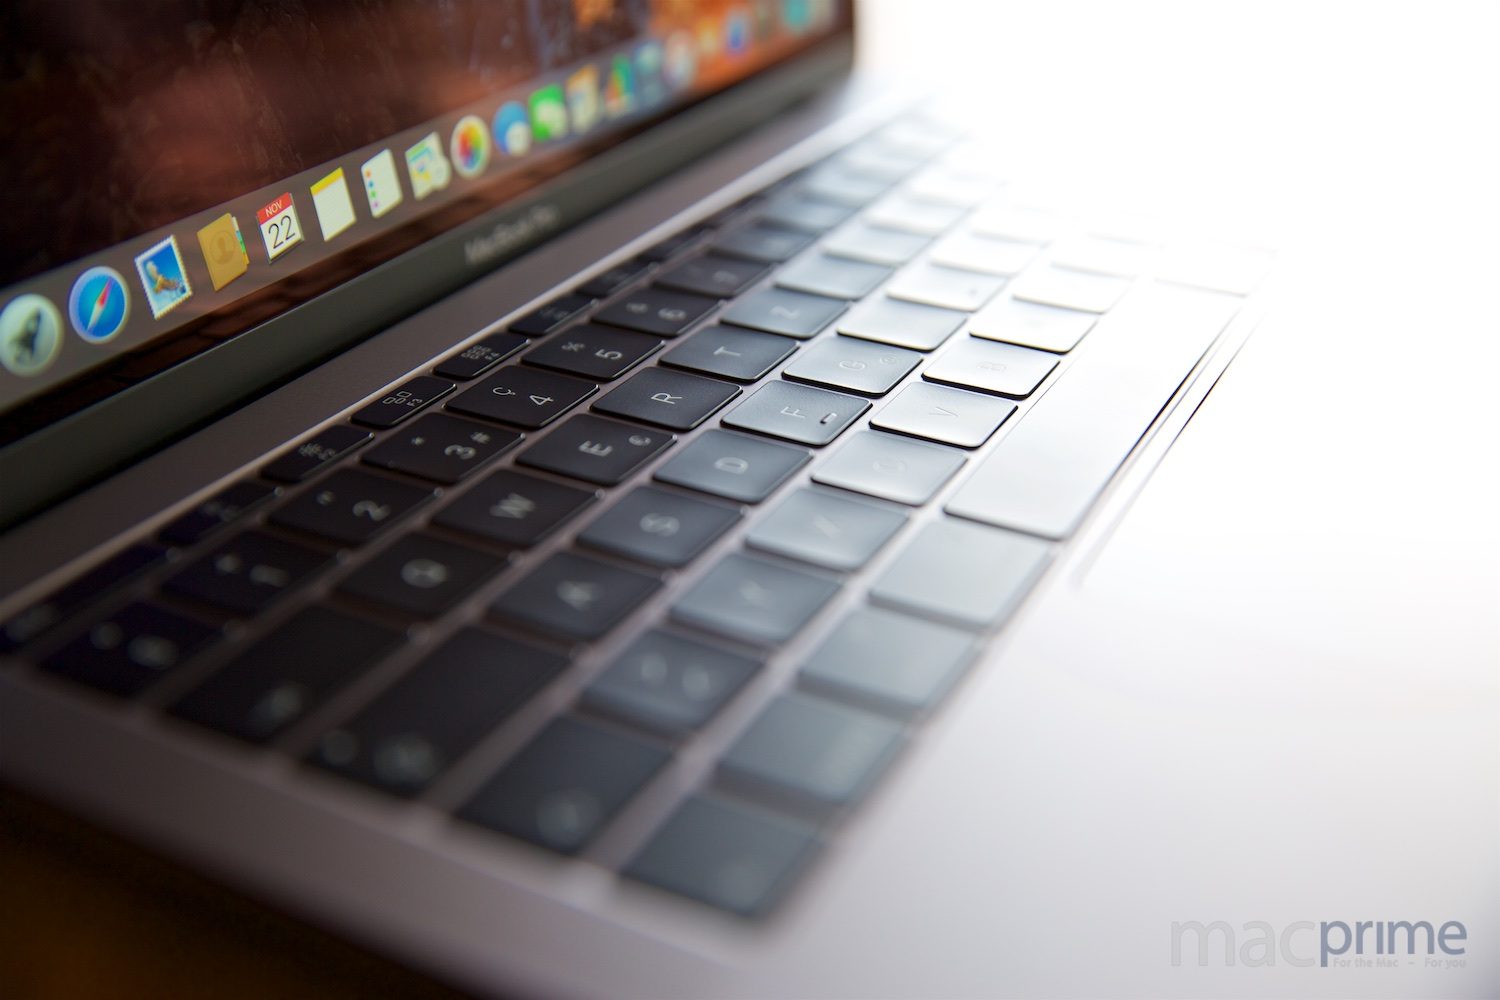 Lässt sich sehen: das edle MacBook Pro in Space Grau